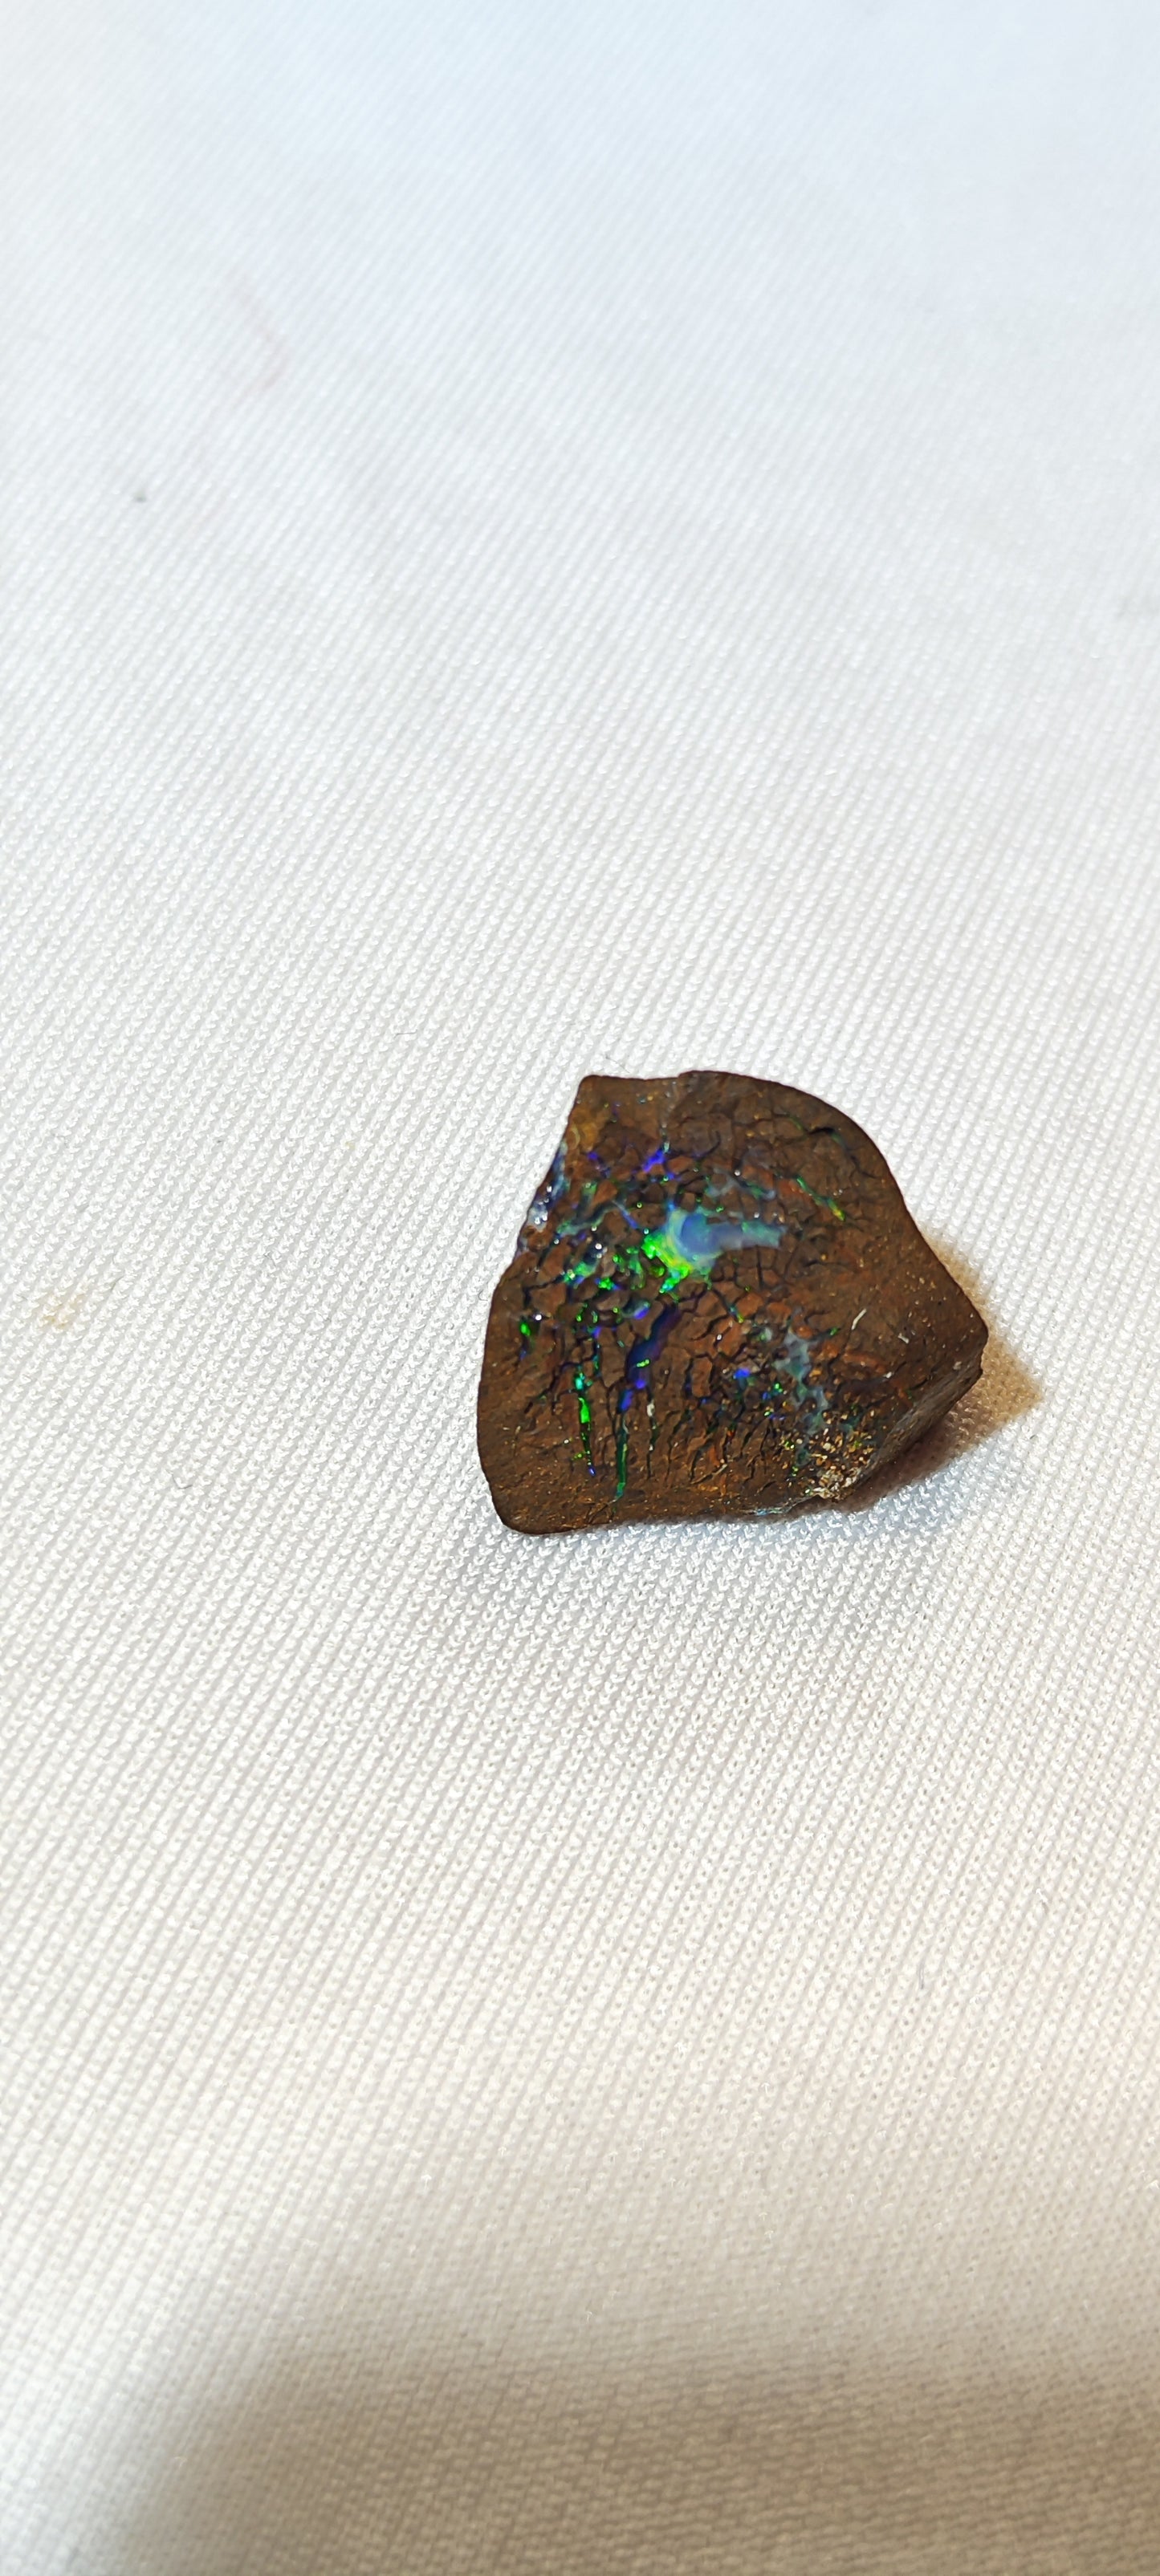 Opale boulder matrix brut